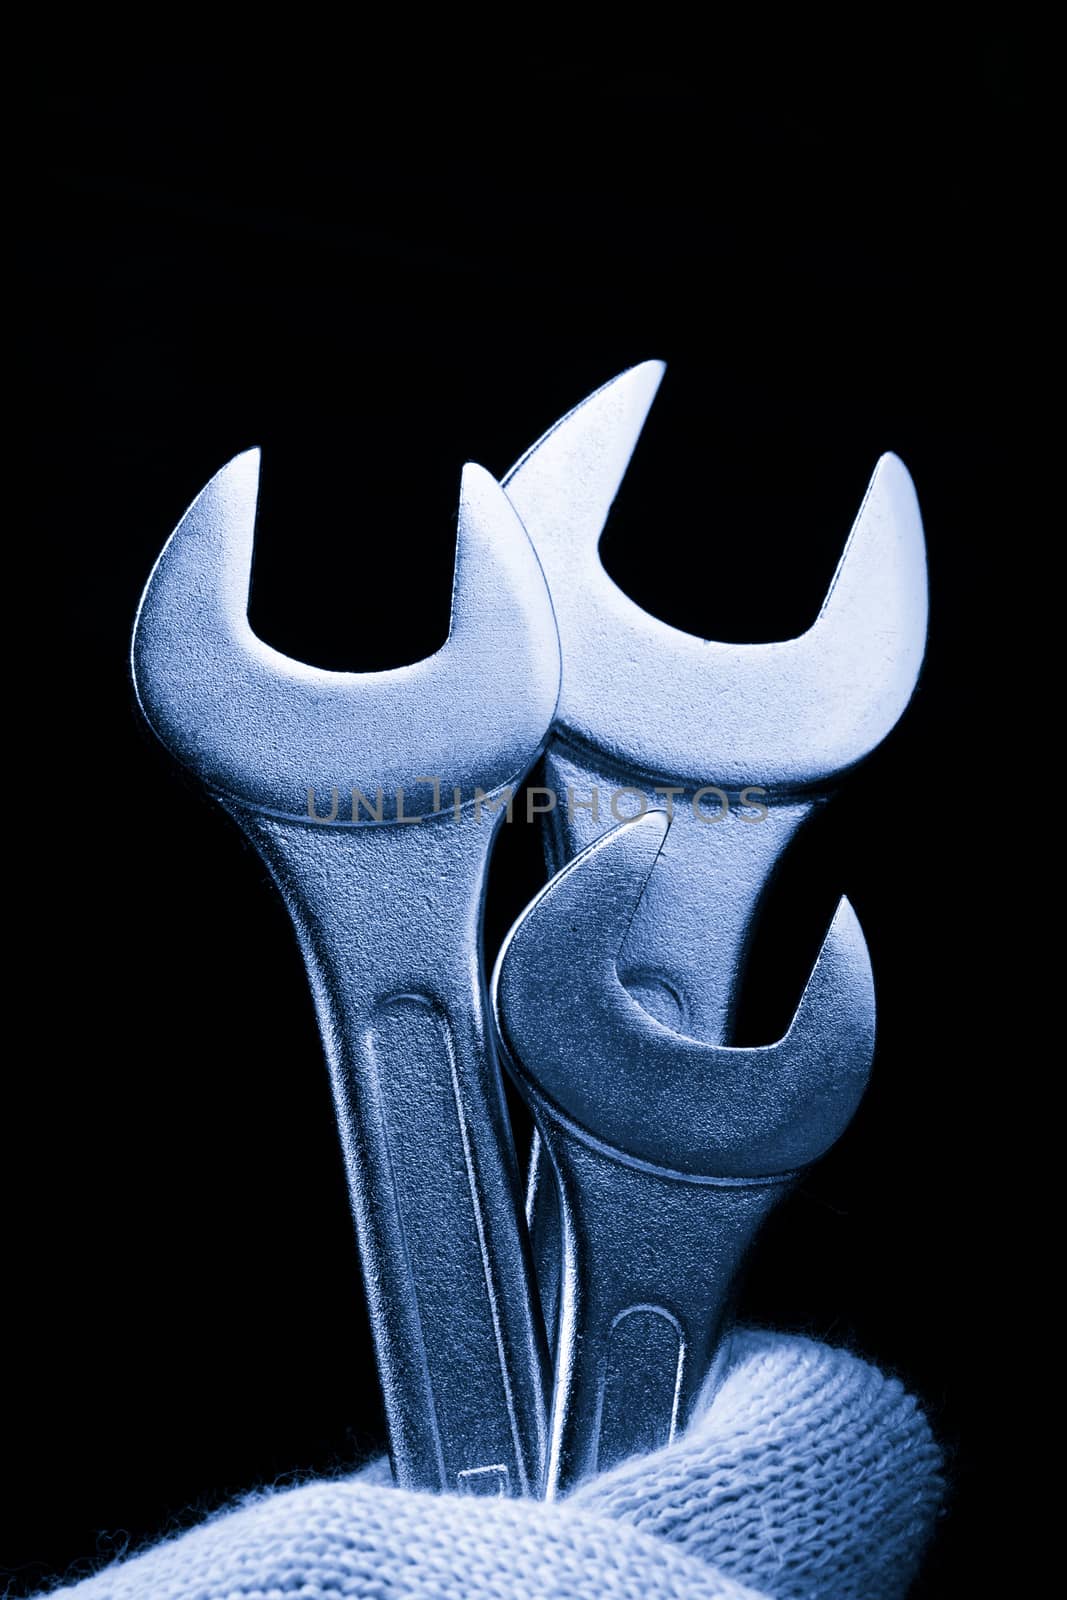 Metallic wrenches in male hand by Garsya